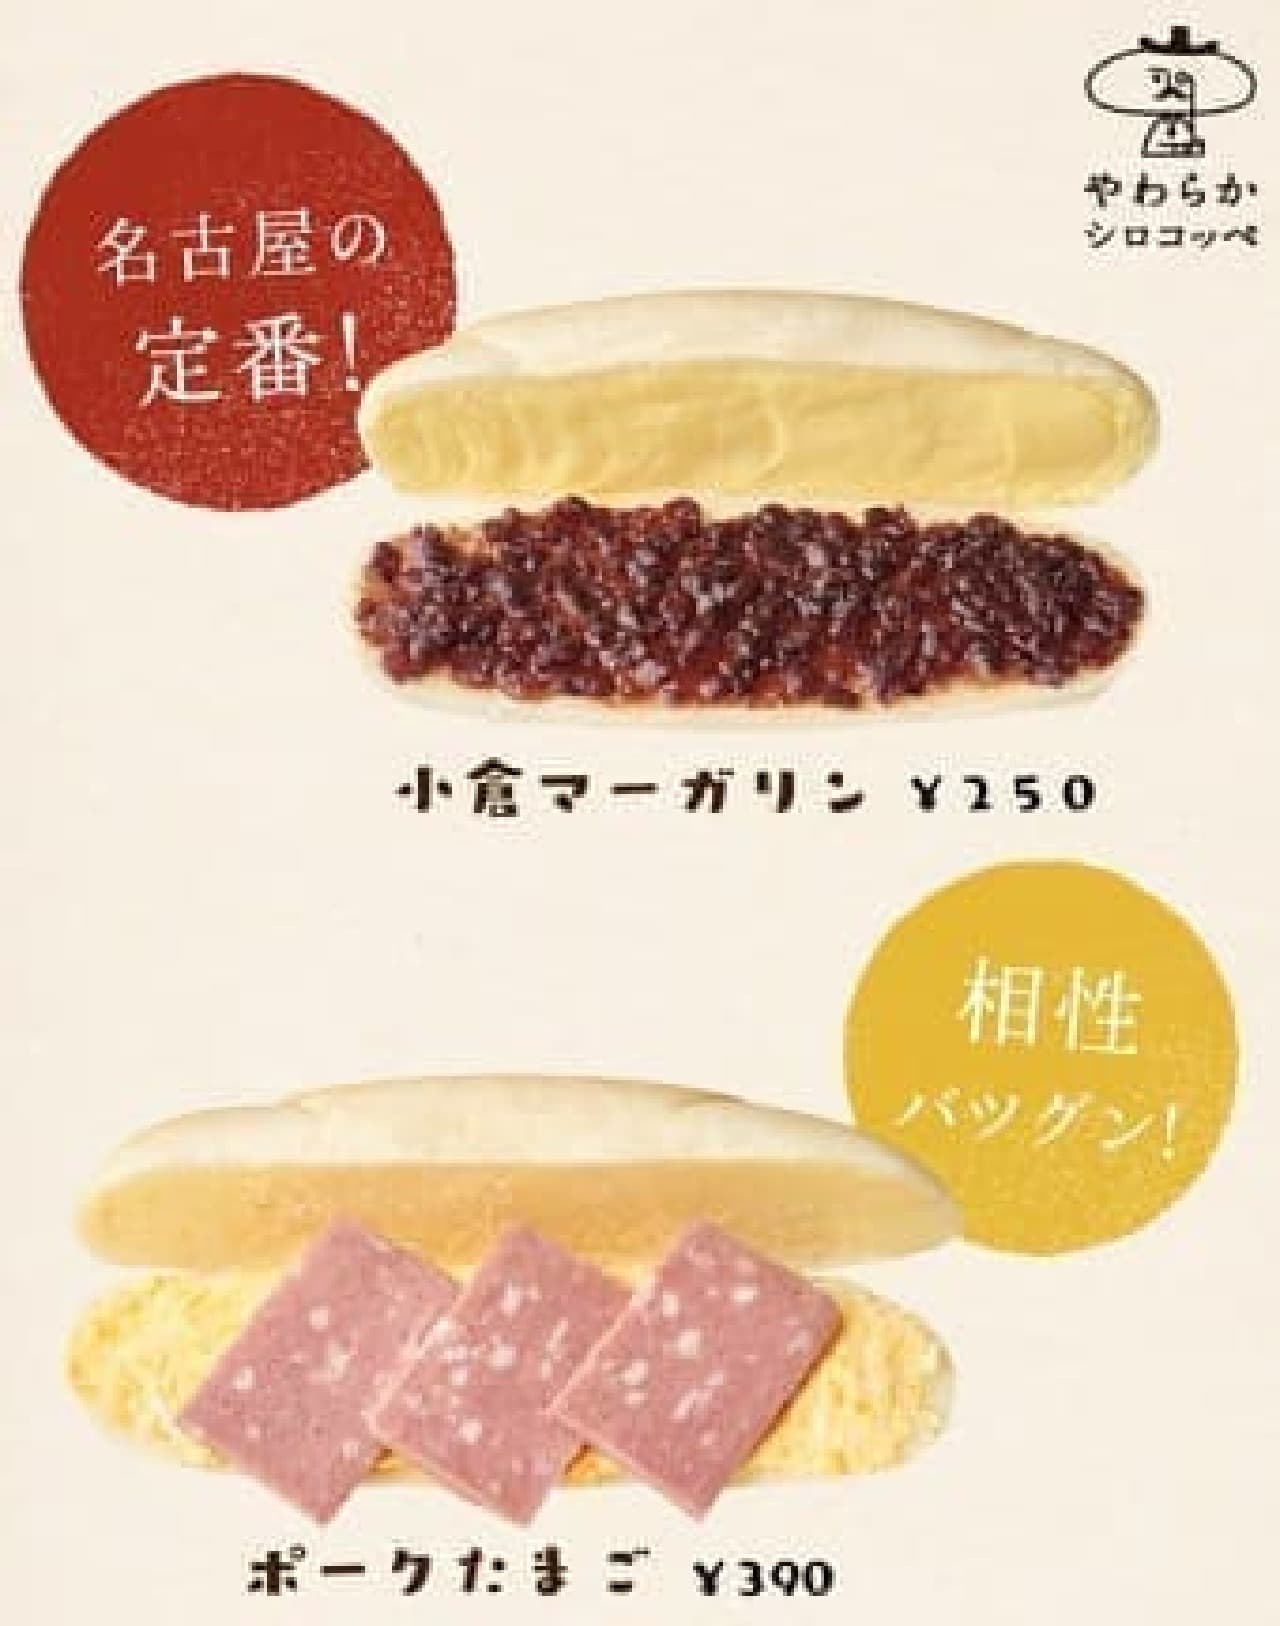 Komeda Sasa Soft Shirokoppe "Ogura Margarine" "Pork Egg"